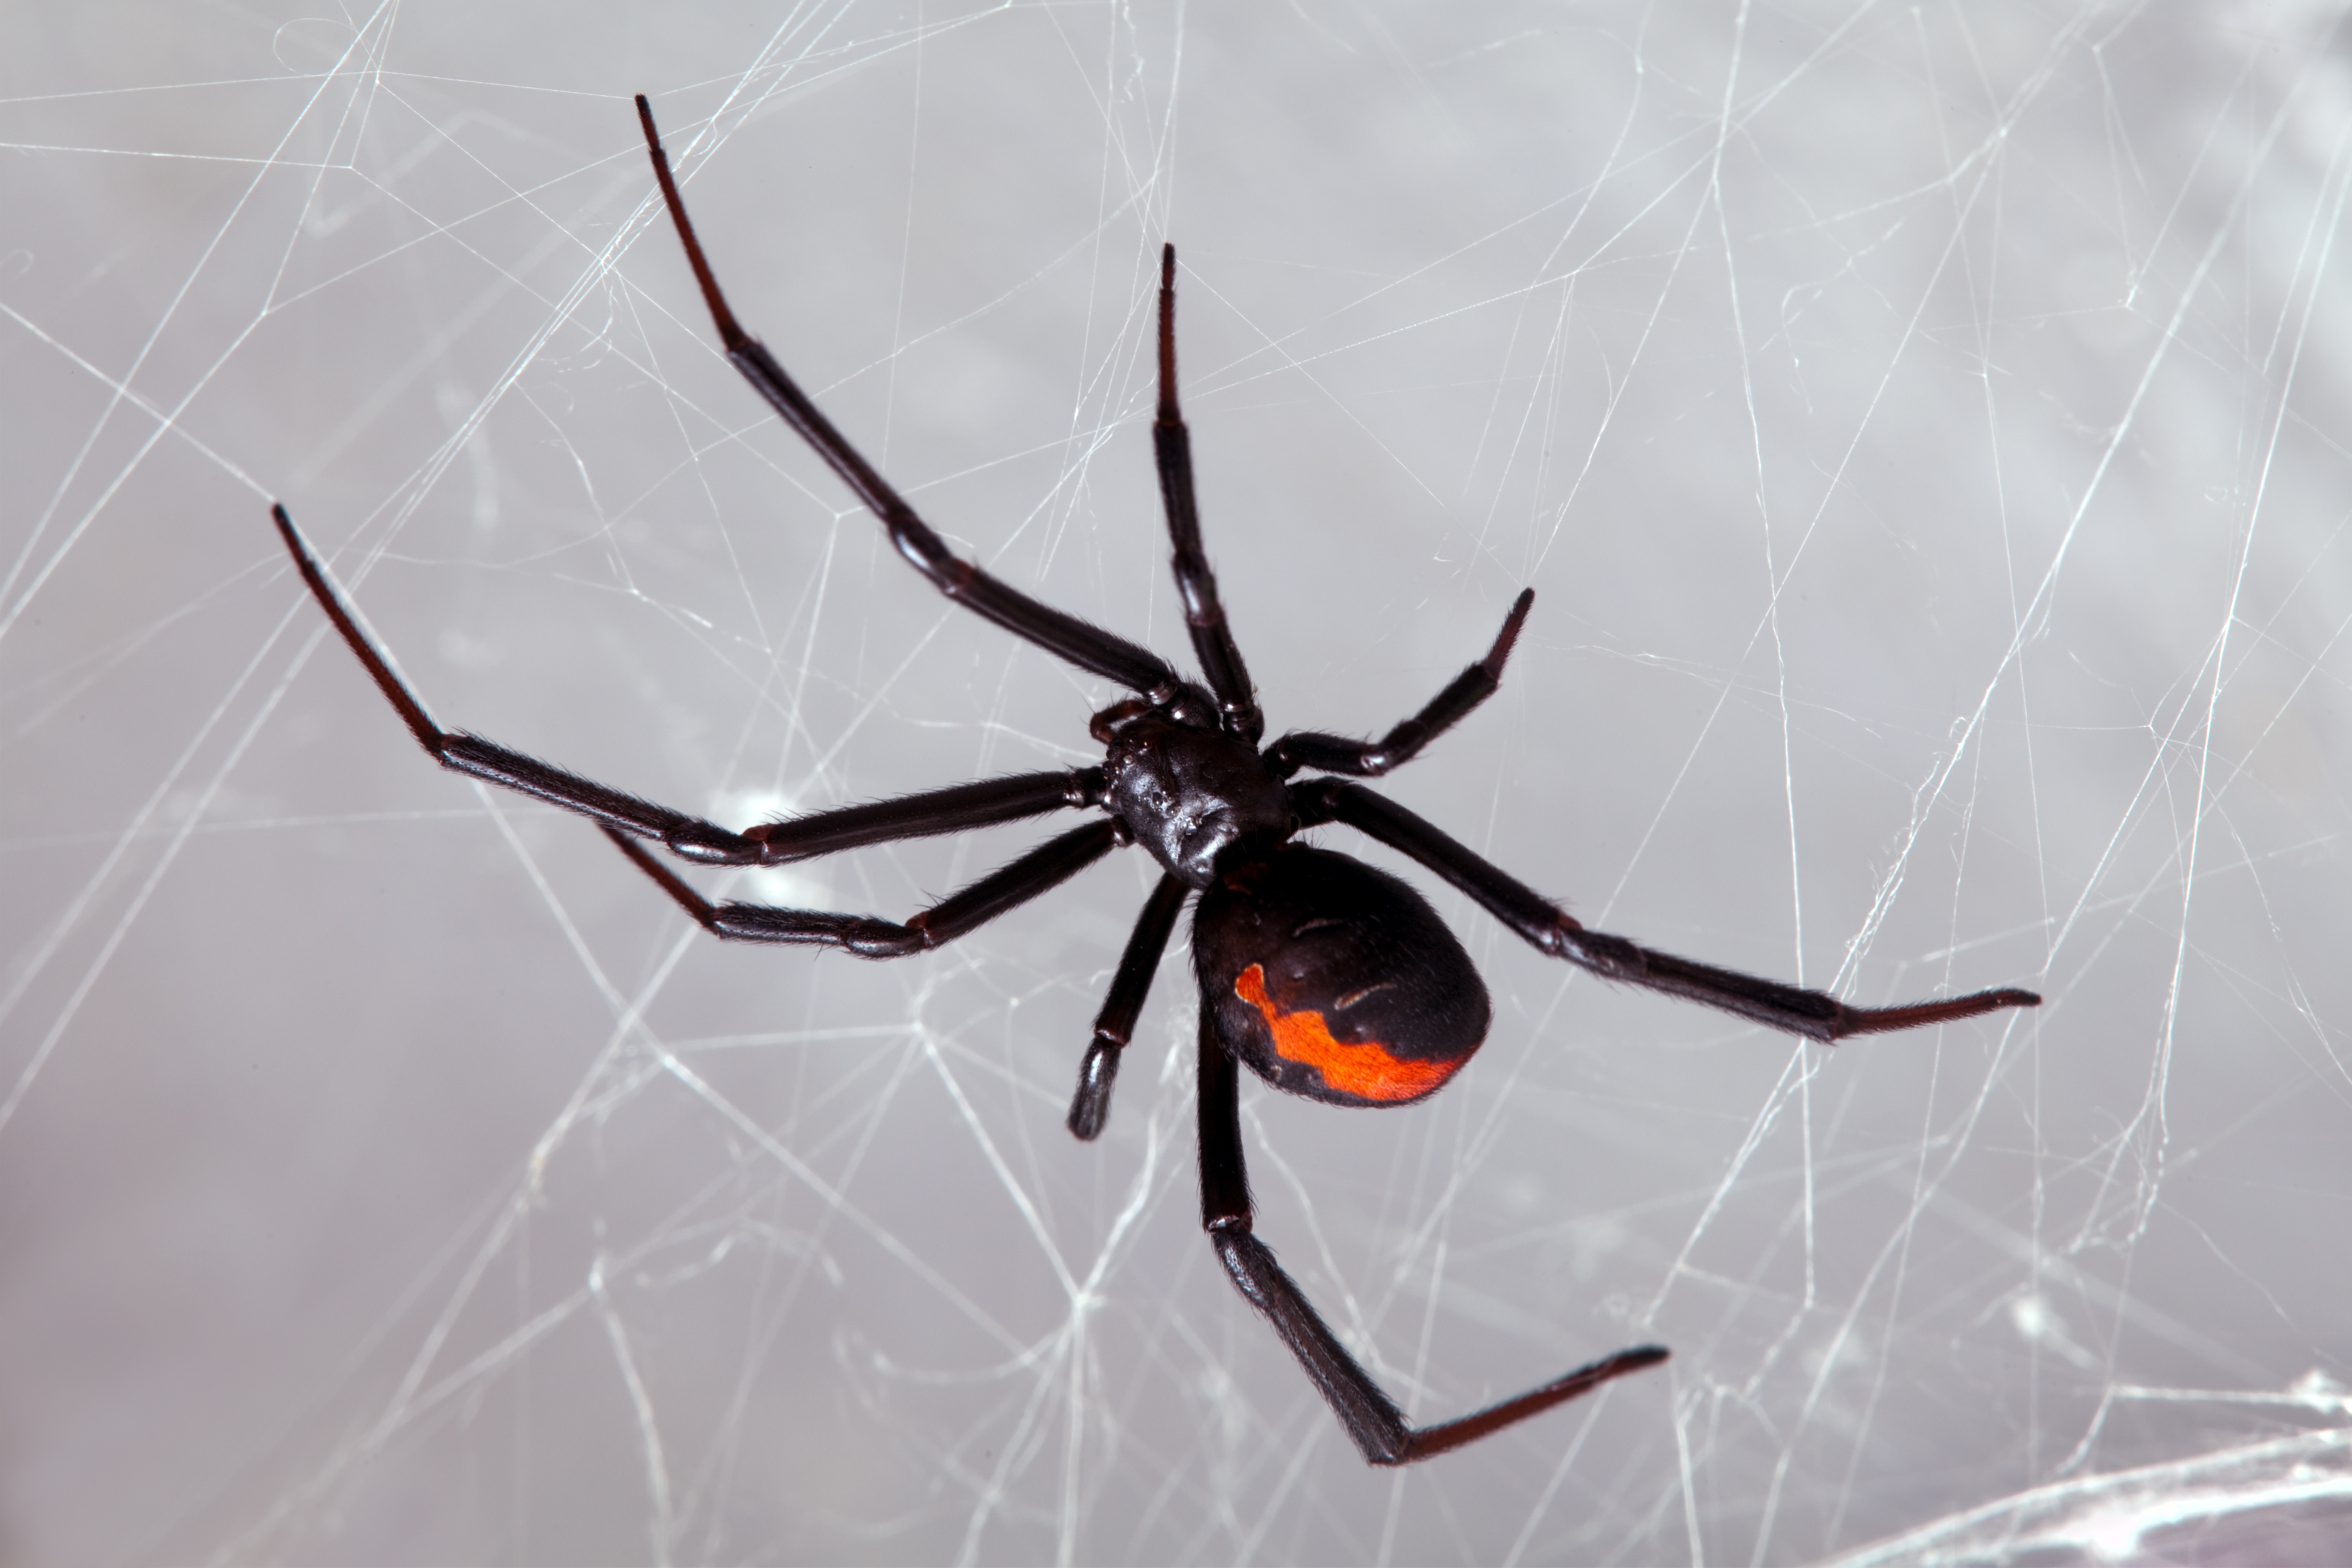 Black Widow Exterminator: Remove Spiders, Dallas Spider Exterminator